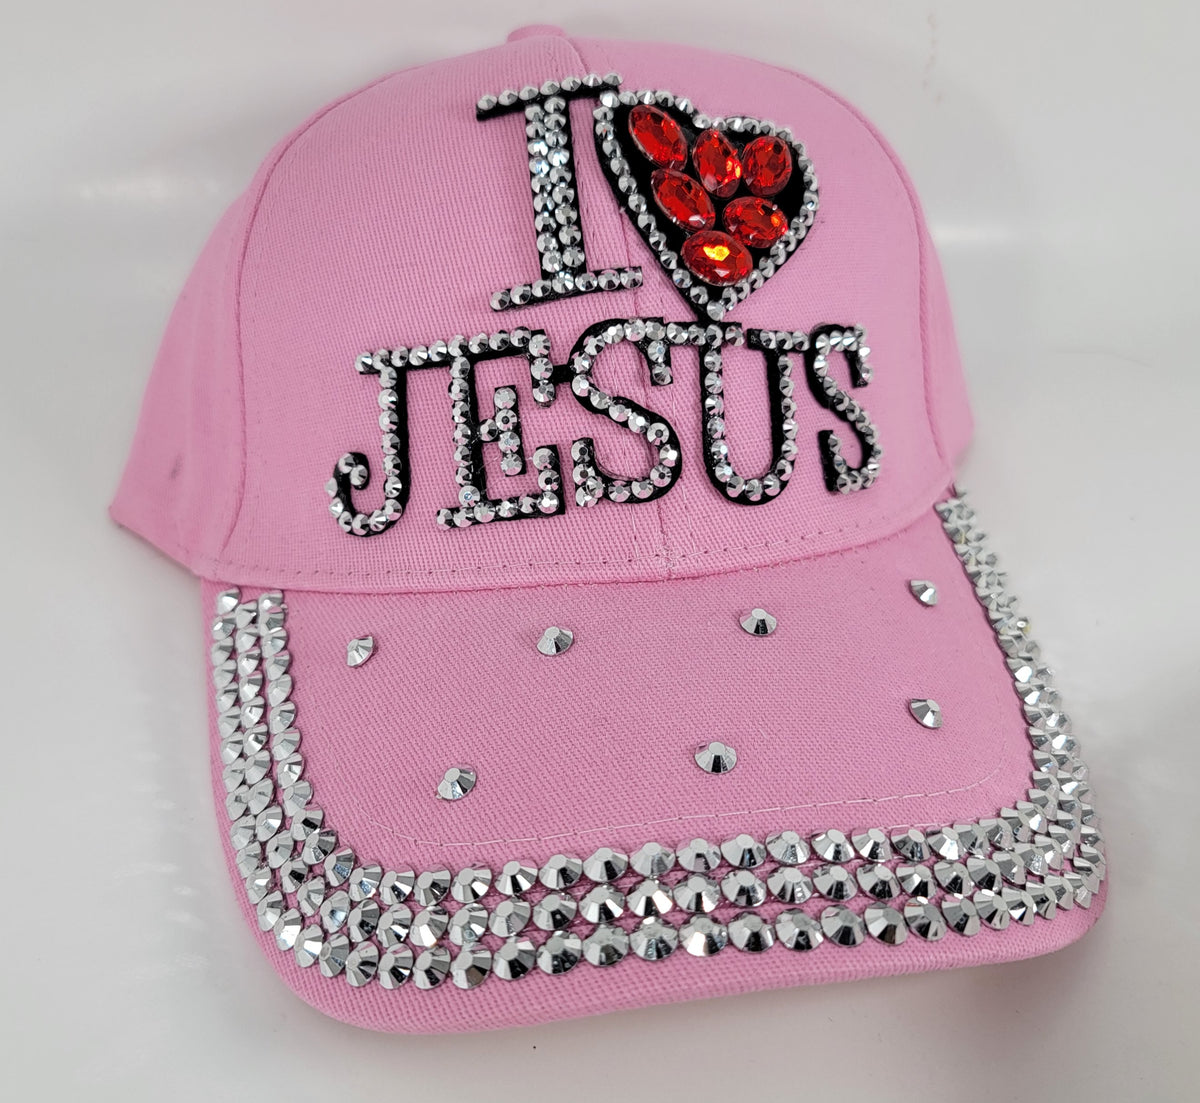 "I Love Jesus" Rhinestone Pink Cap - Shiny Bling Sports I Love Jesus Cap